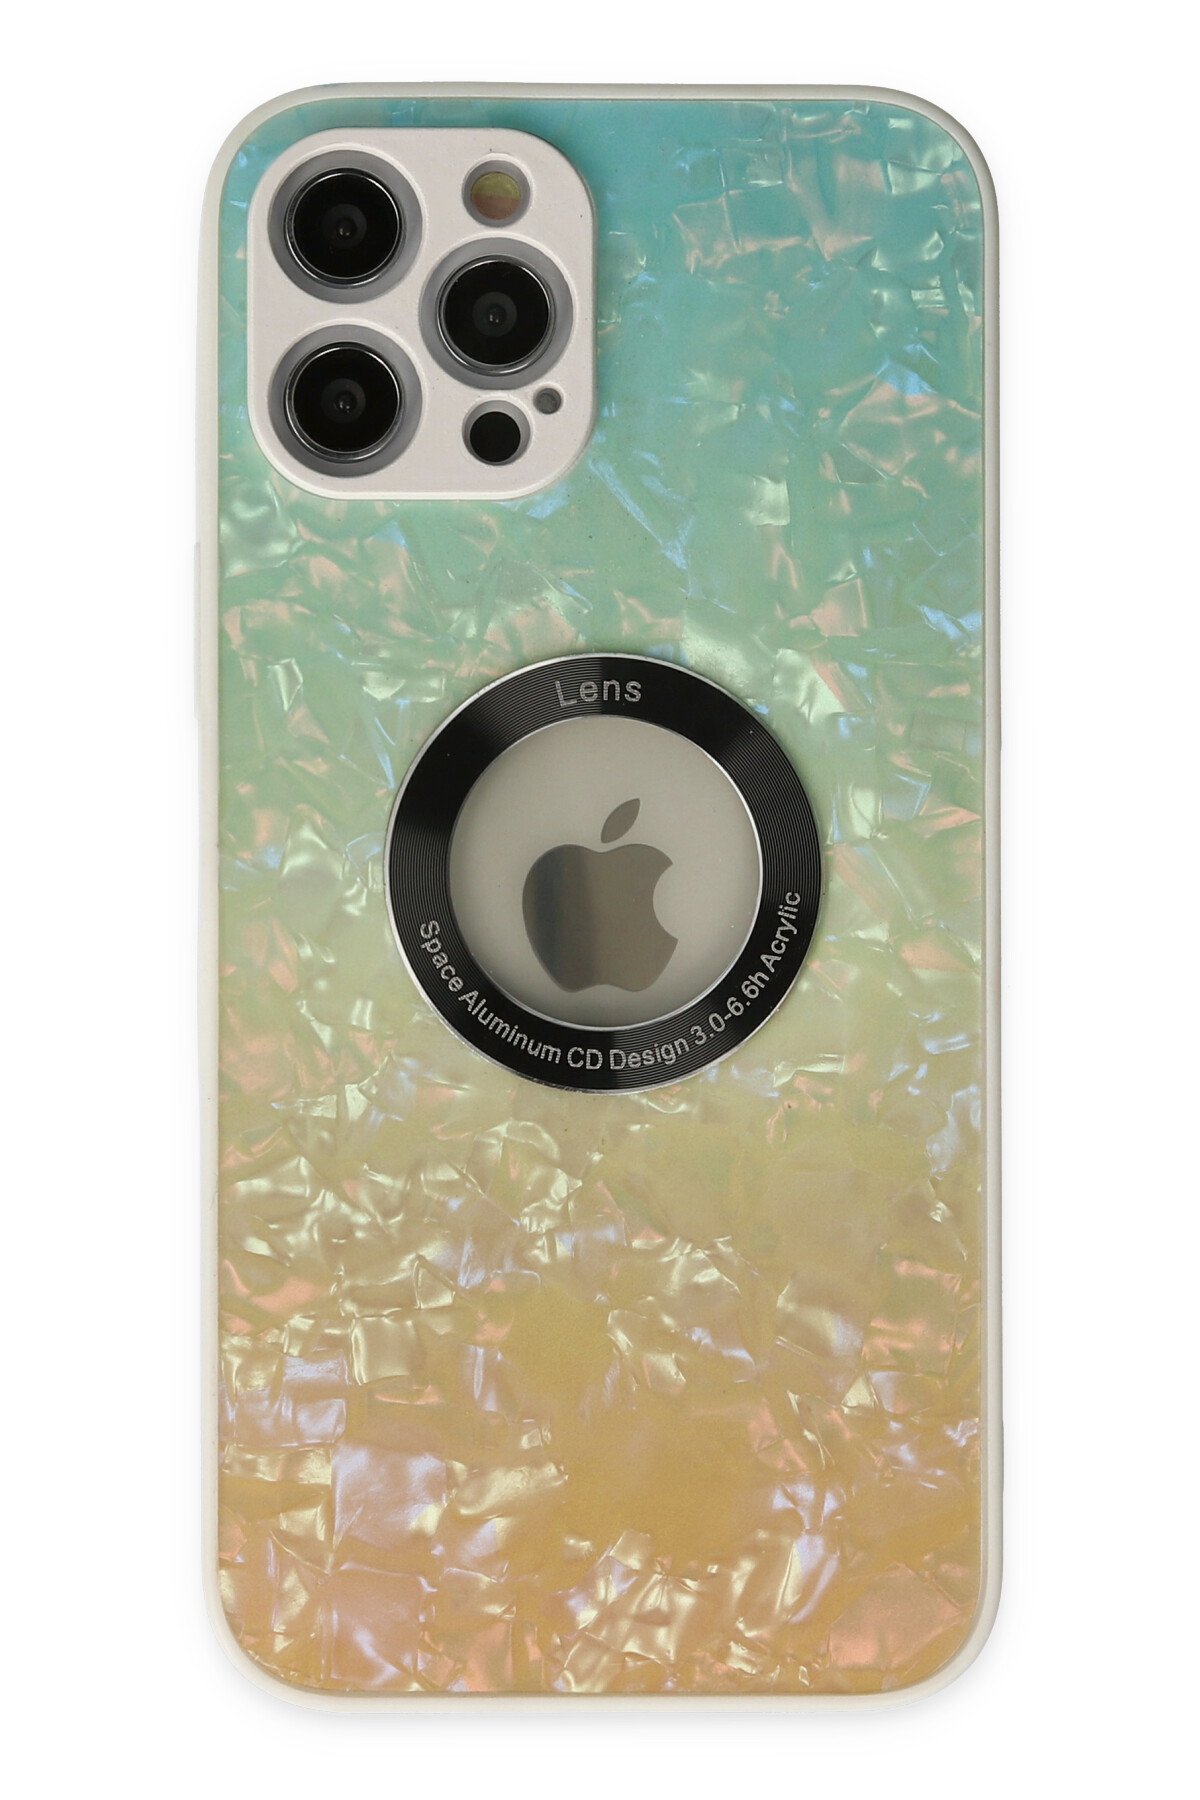 Newface iPhone 12 Pro Max Kılıf Store Silikon - Kırmızı